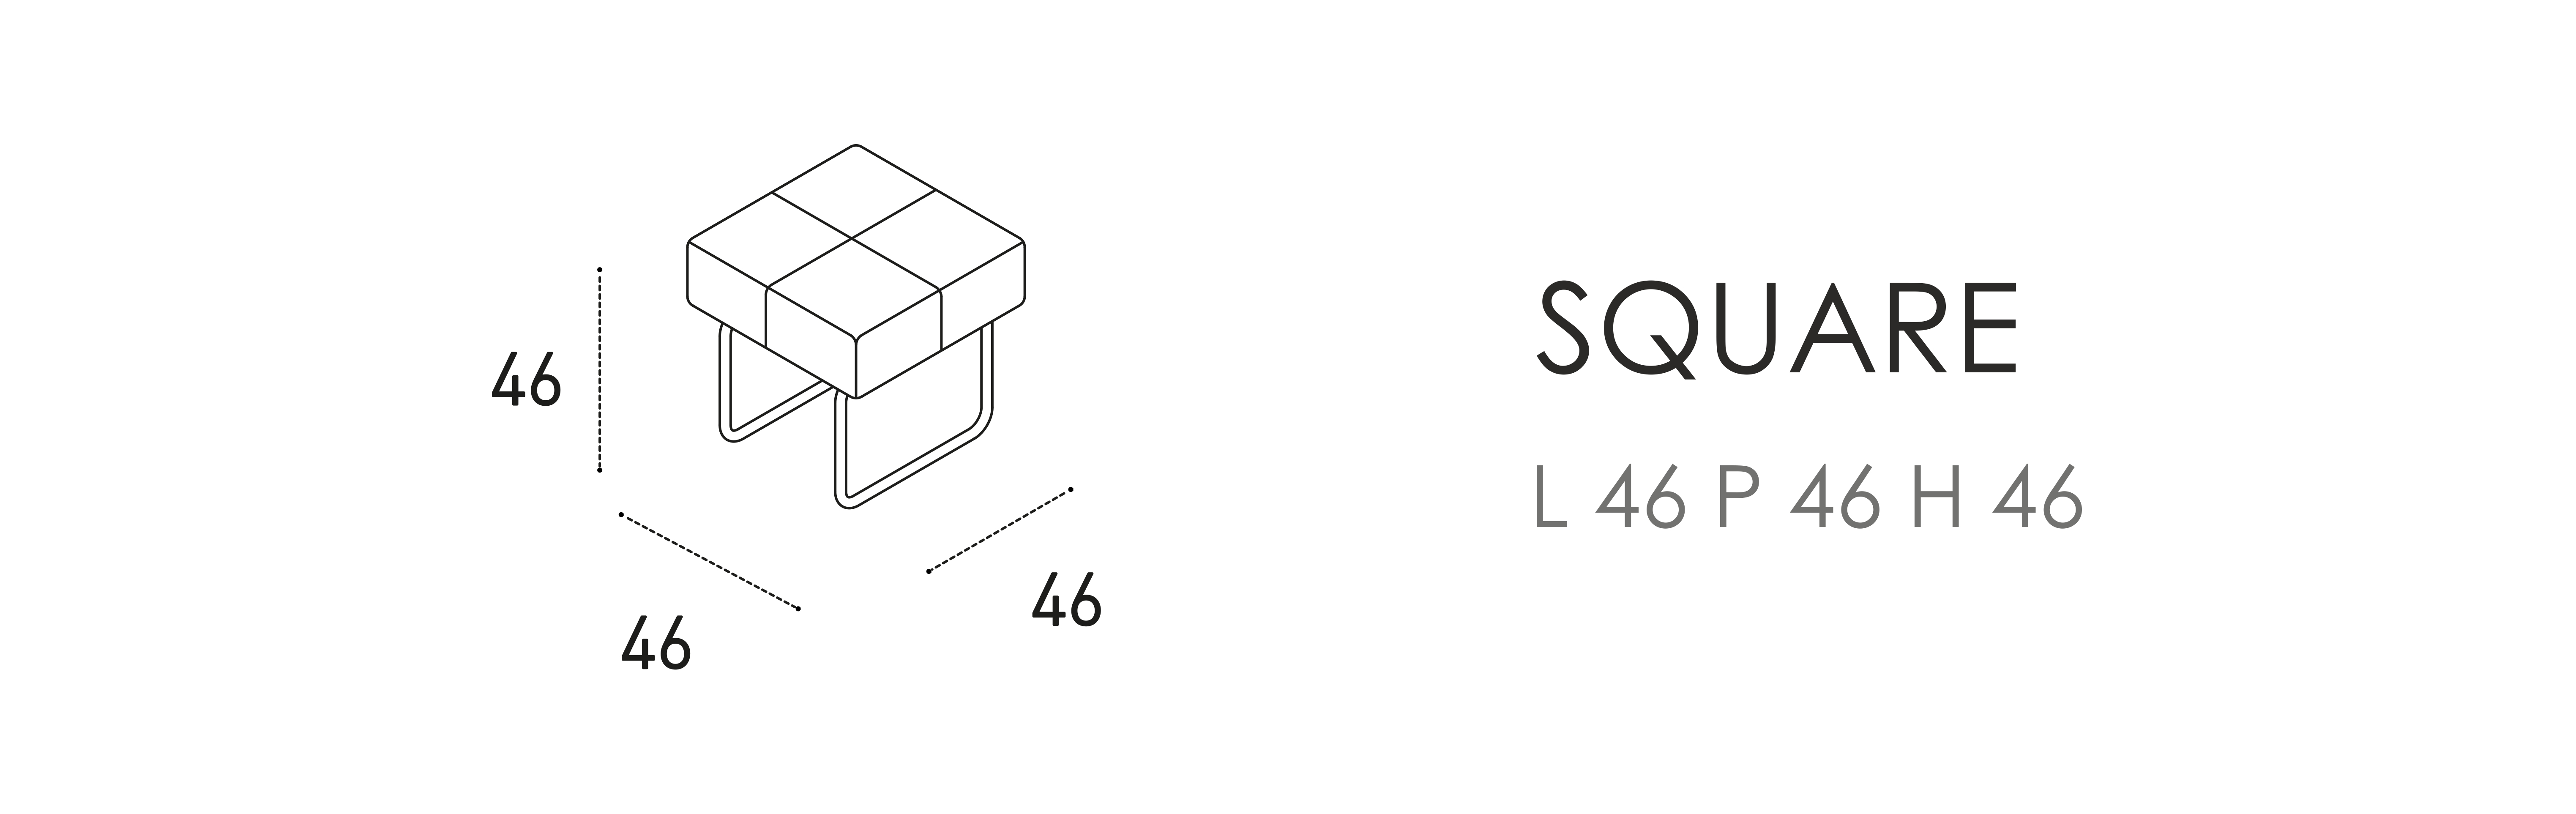 Square L 46 P 46 H 46